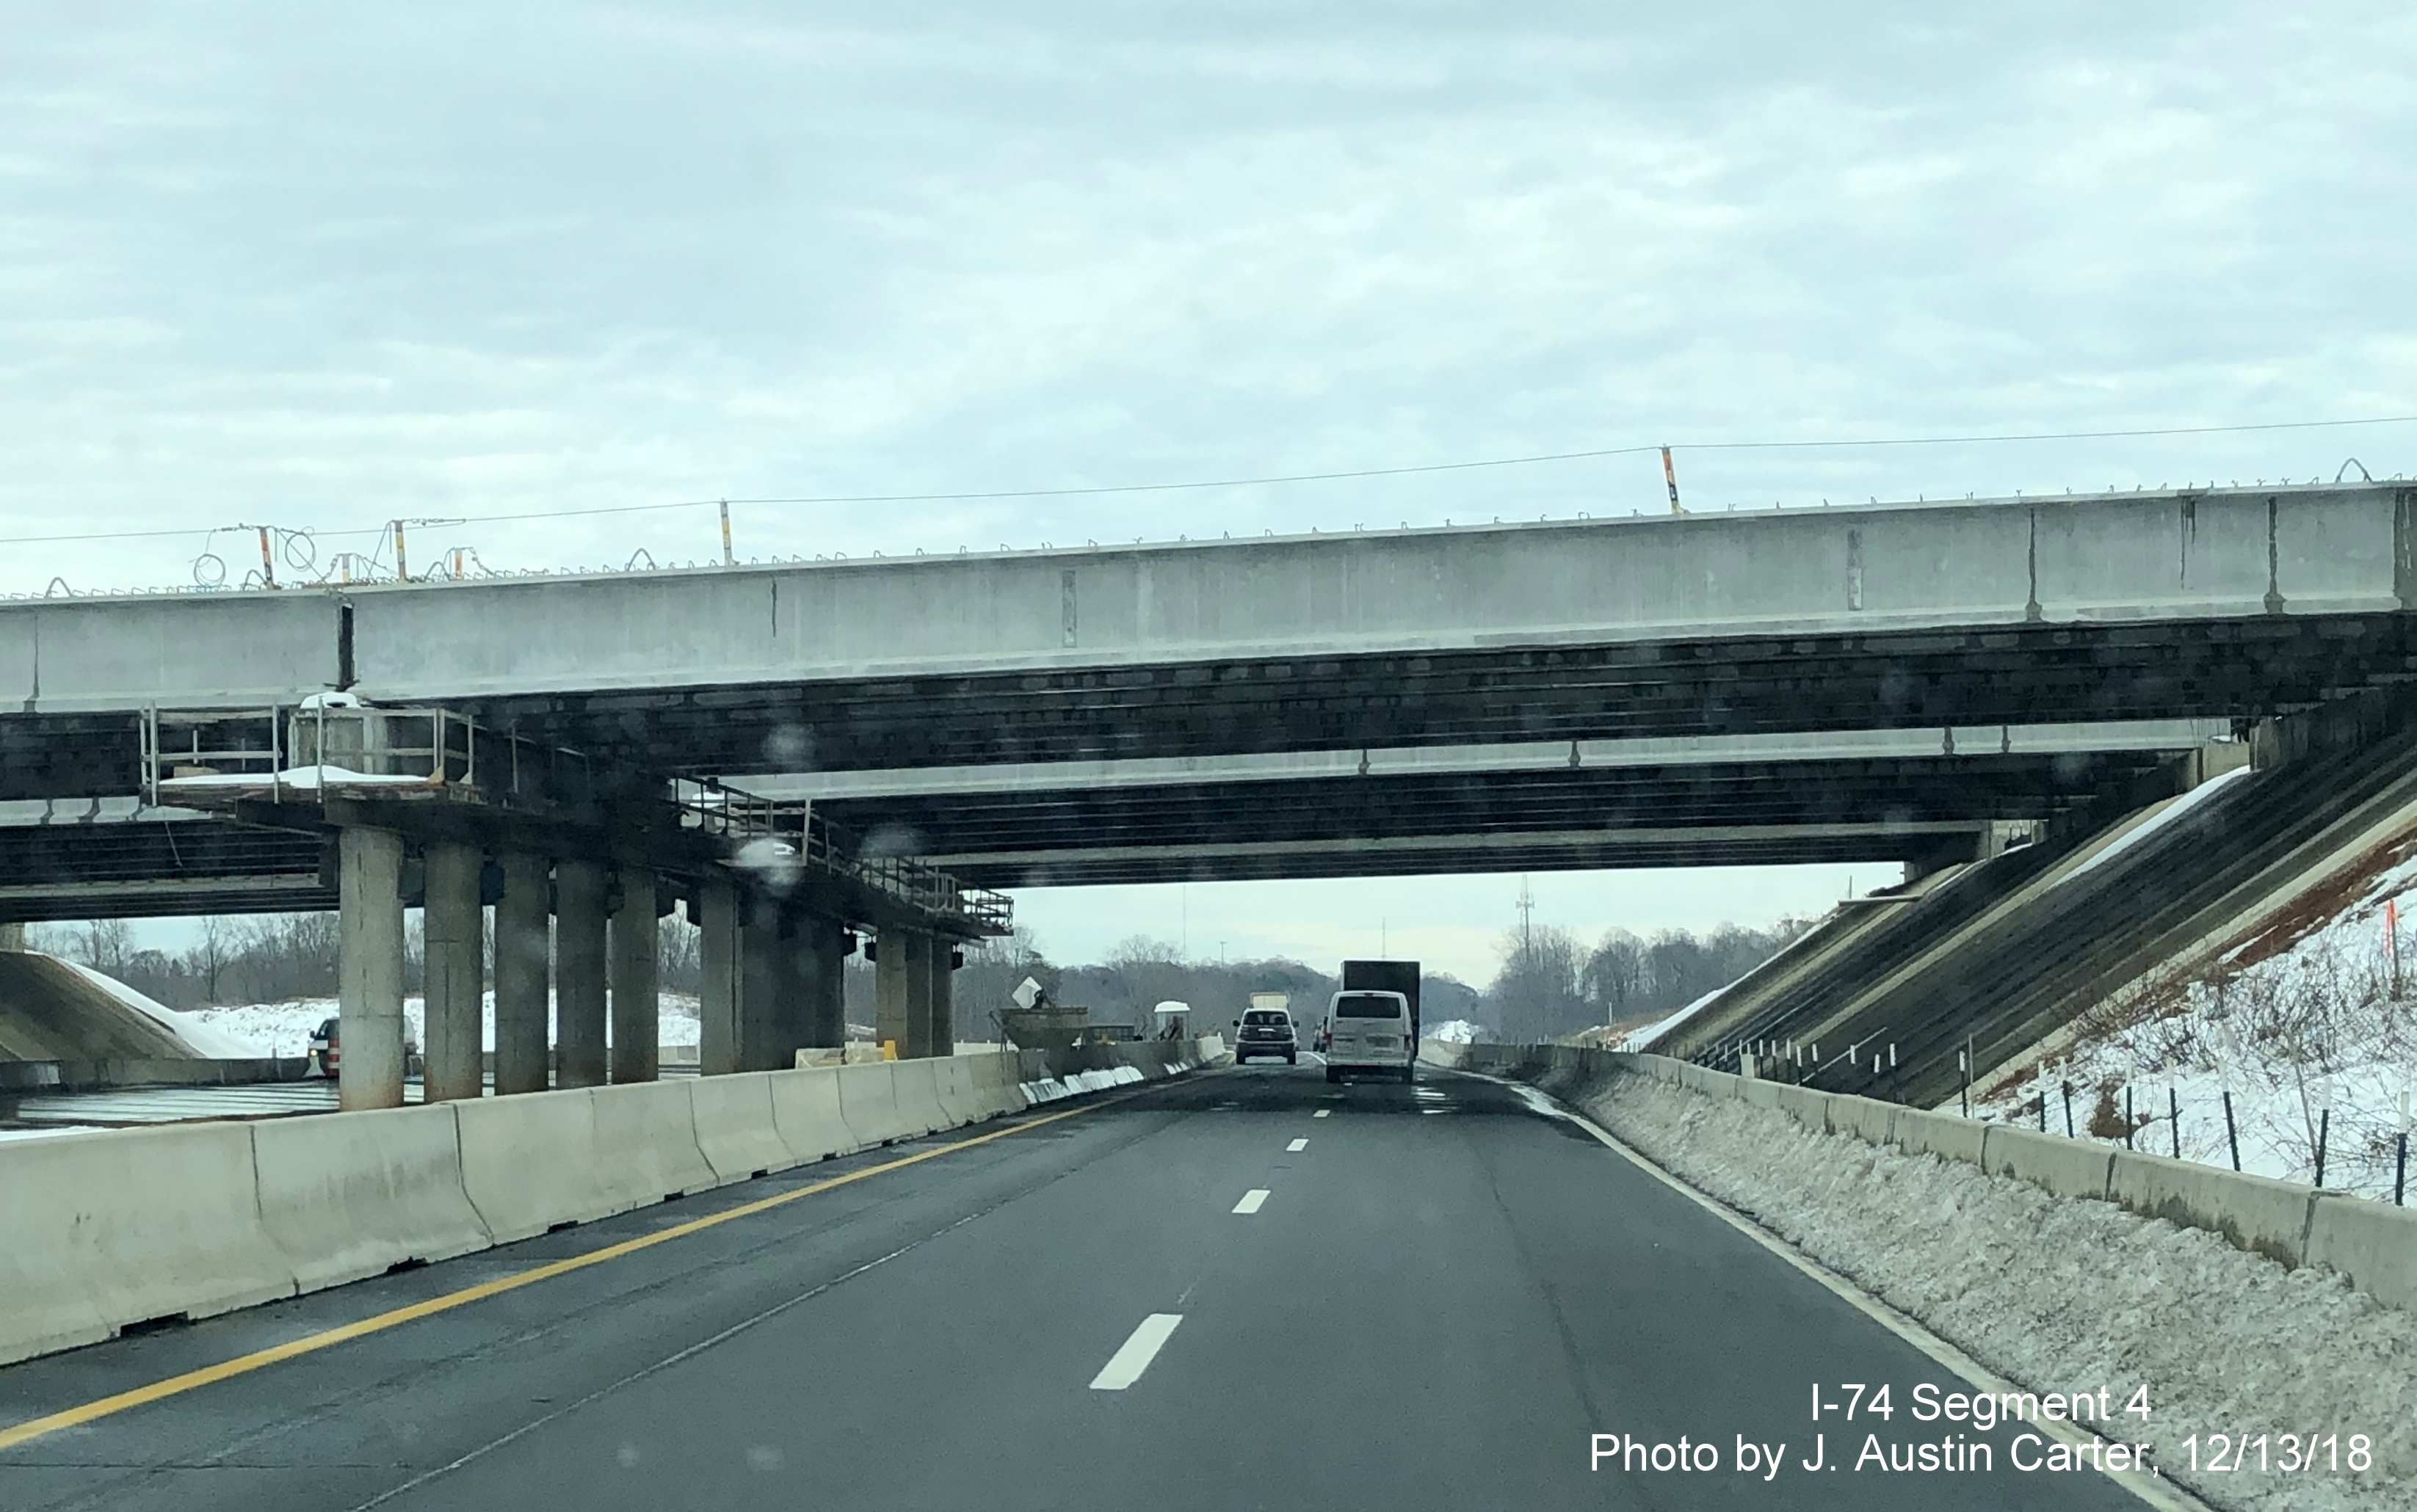 Image of new bridges to carry Future I-74/Winston-Salem Northern Beltway lanes over Business 40 East, by J. Austin Carter